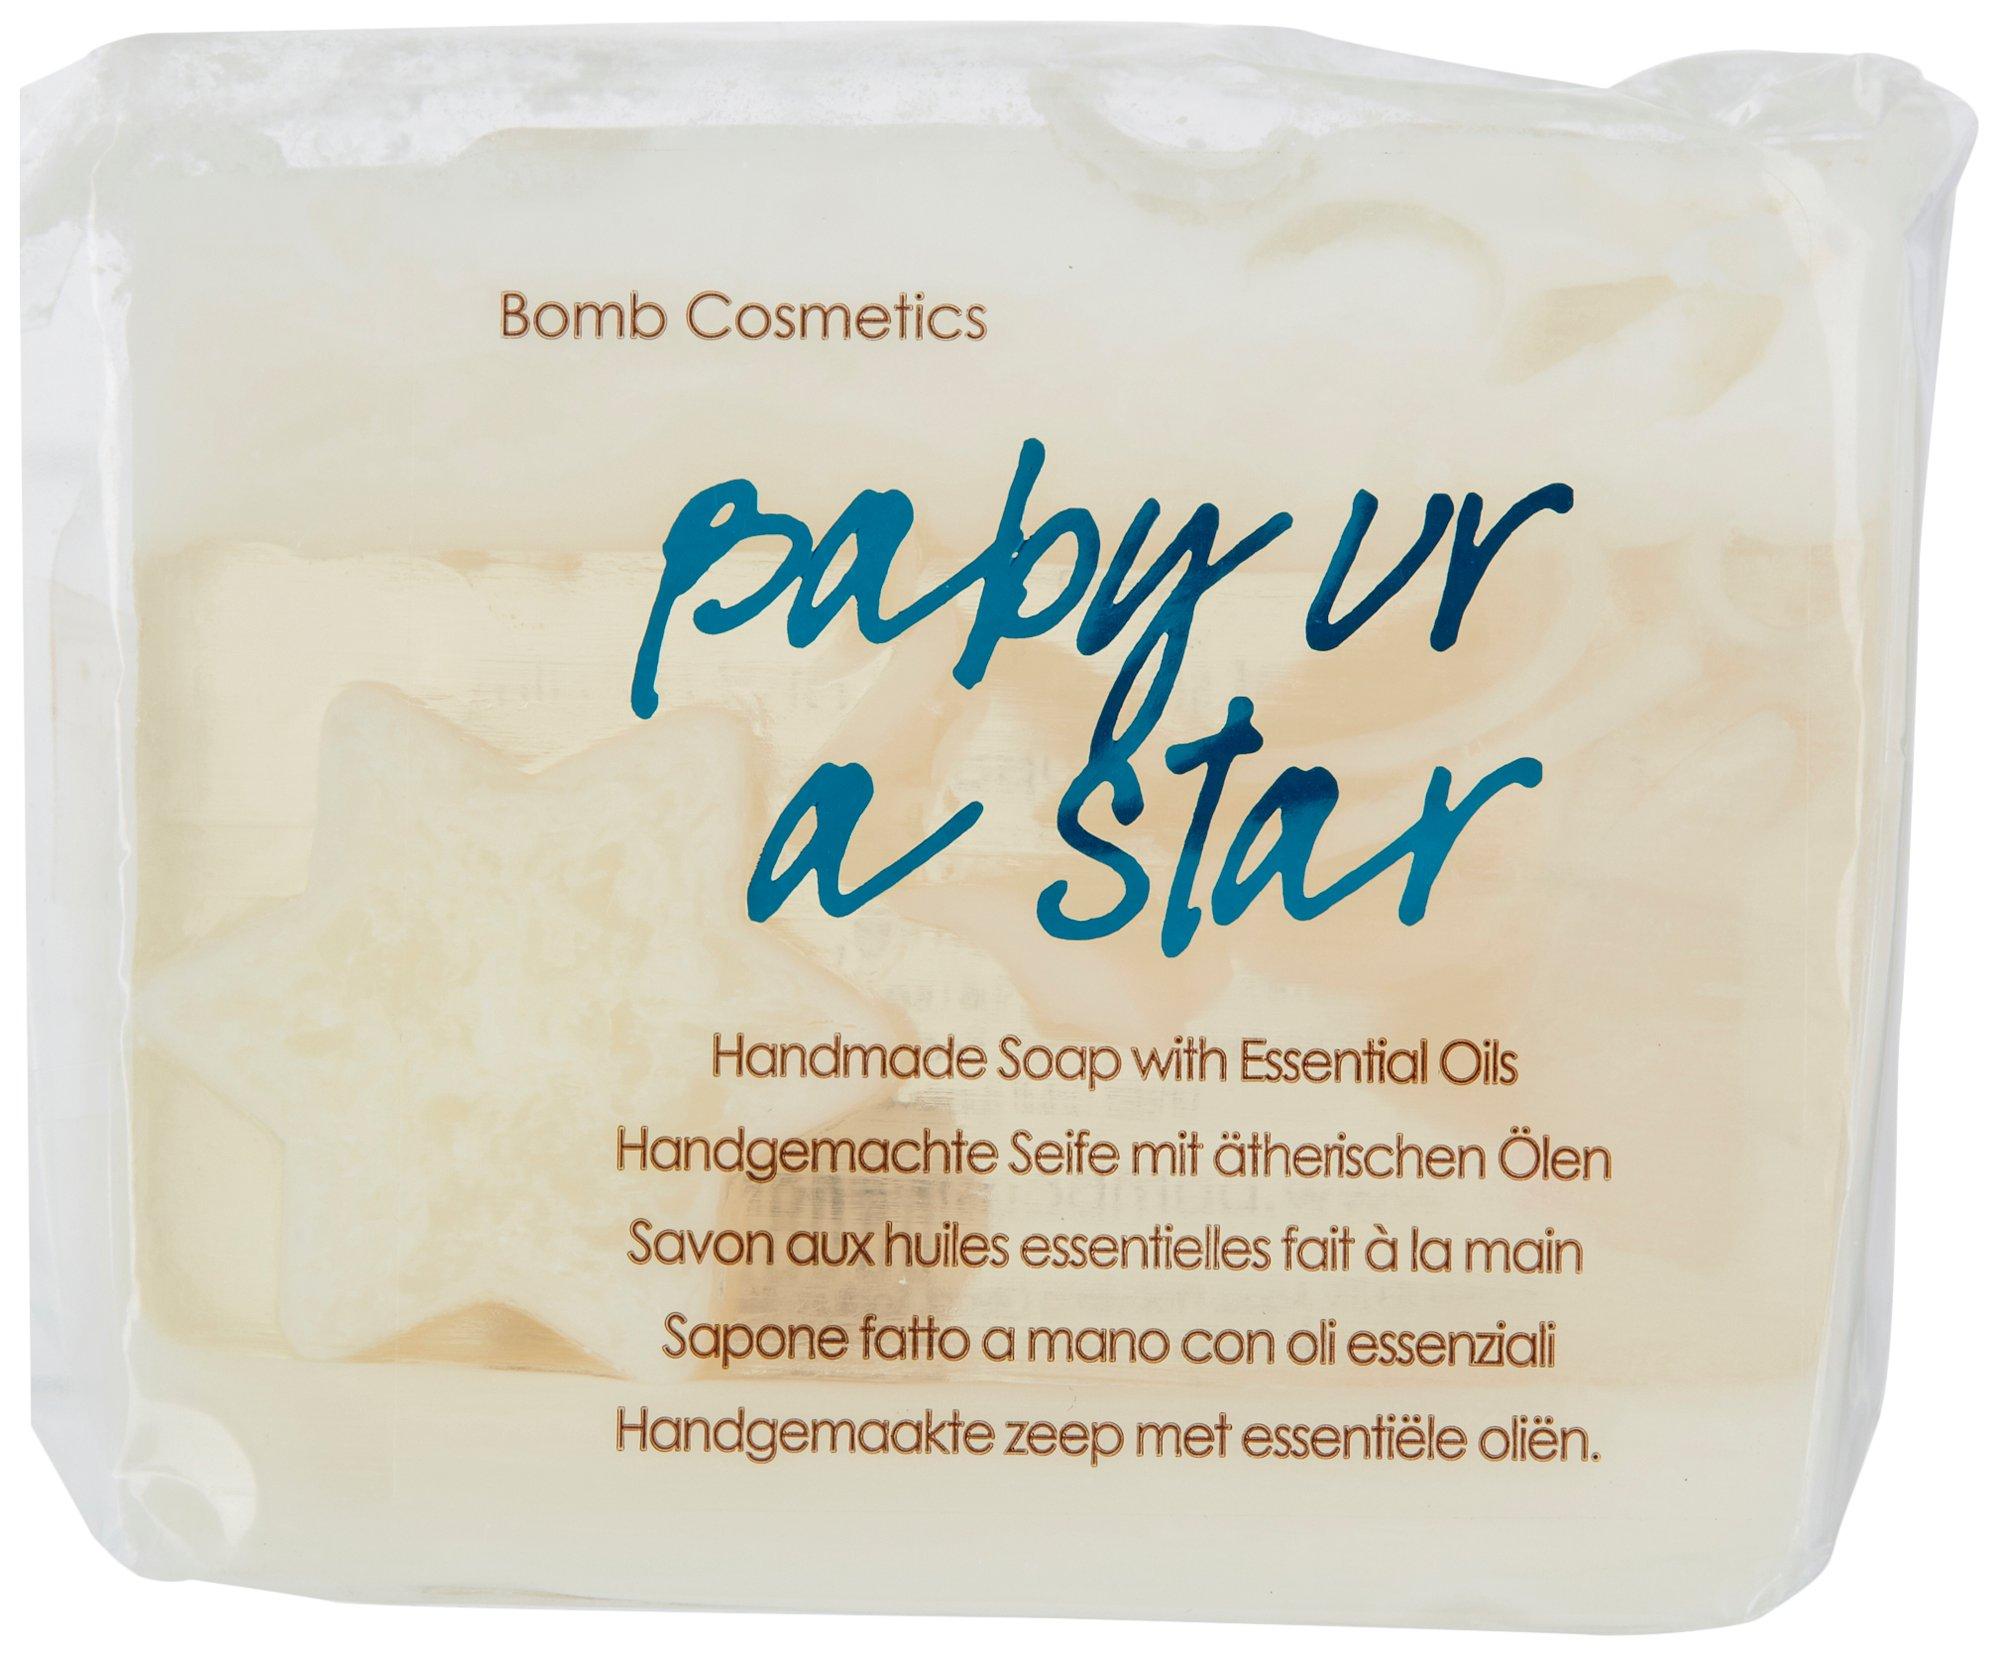 Bomb Cosmetics Baby Ur A Star Handmade Soap